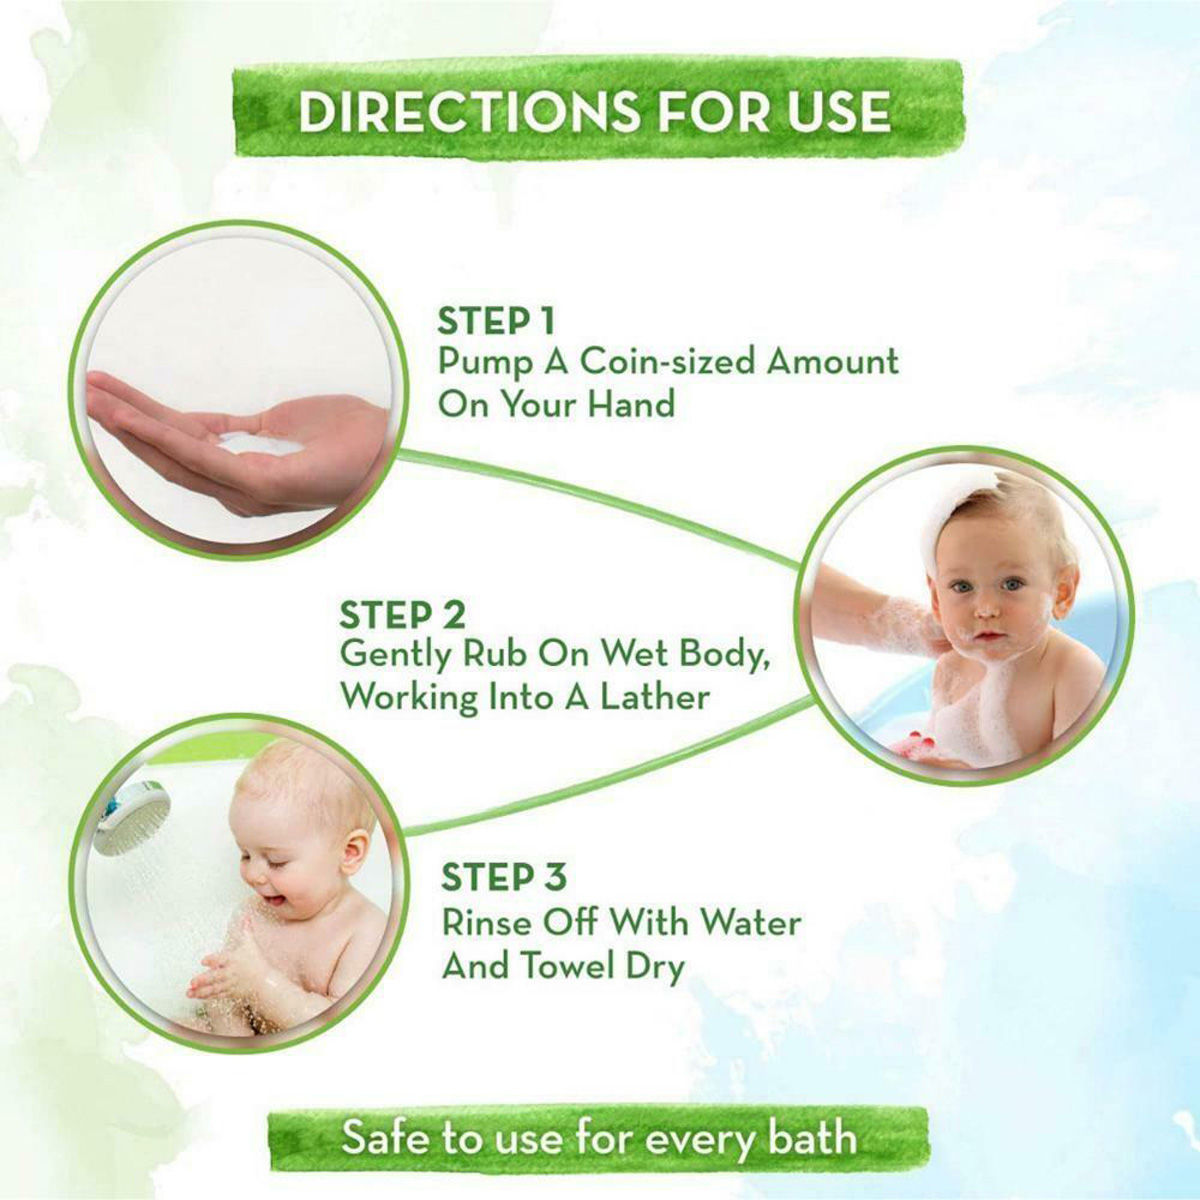 Mamaearth Milky Soft Babies Bodywash 0+Yrs 400Ml, Pack of 1 